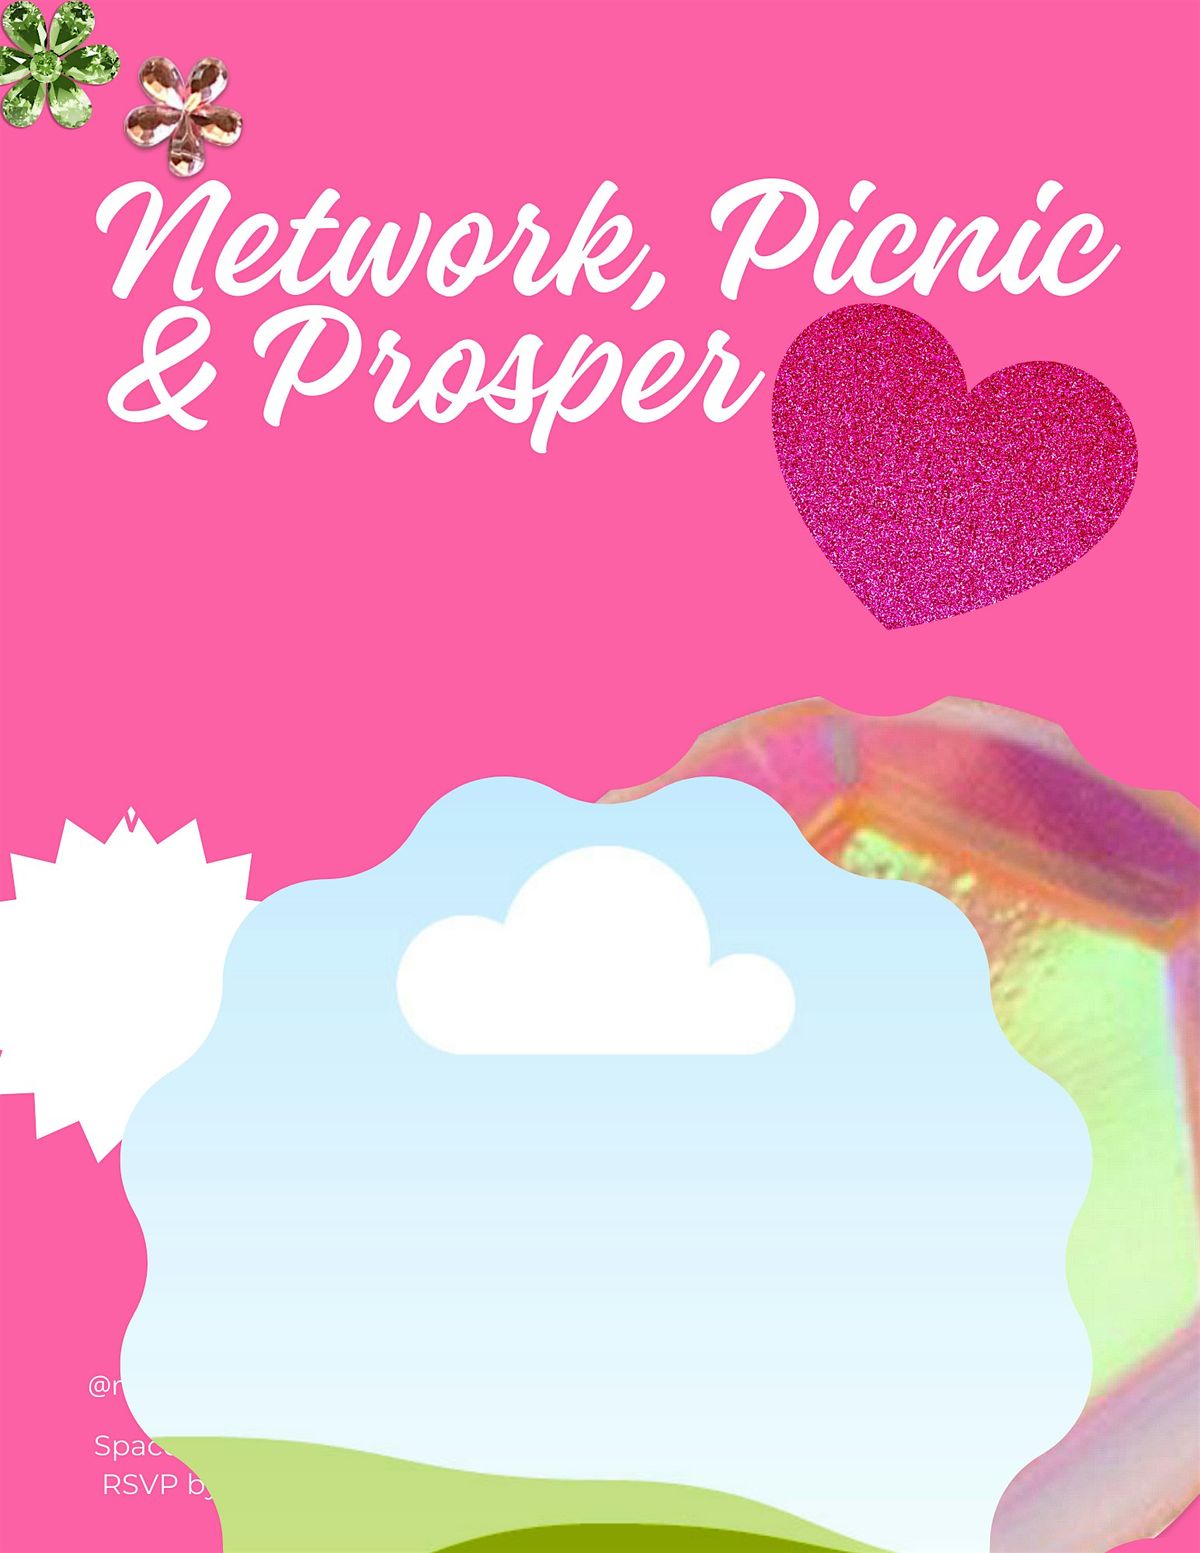 Network, Picnic & Prosper